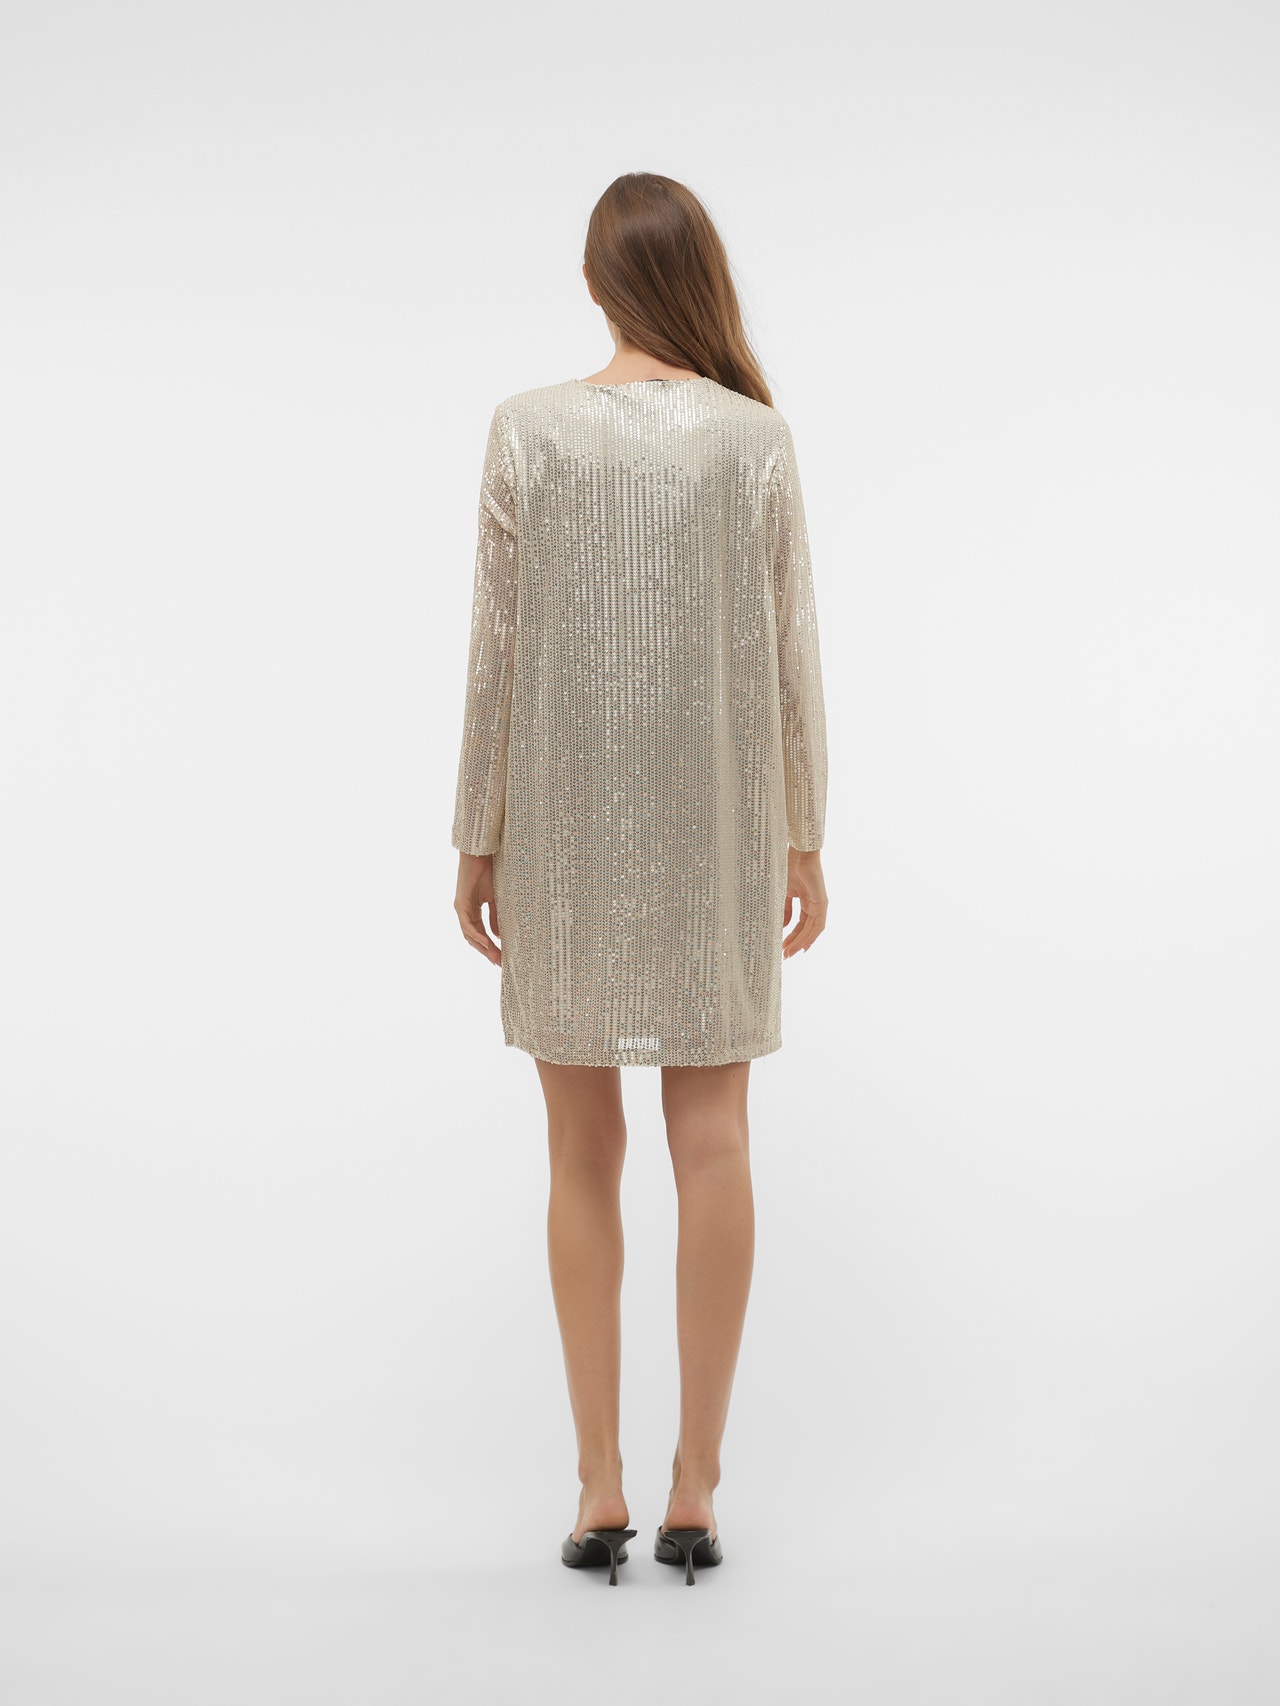 VMMONALISE Short dress | 30% discount! Vero Moda® with